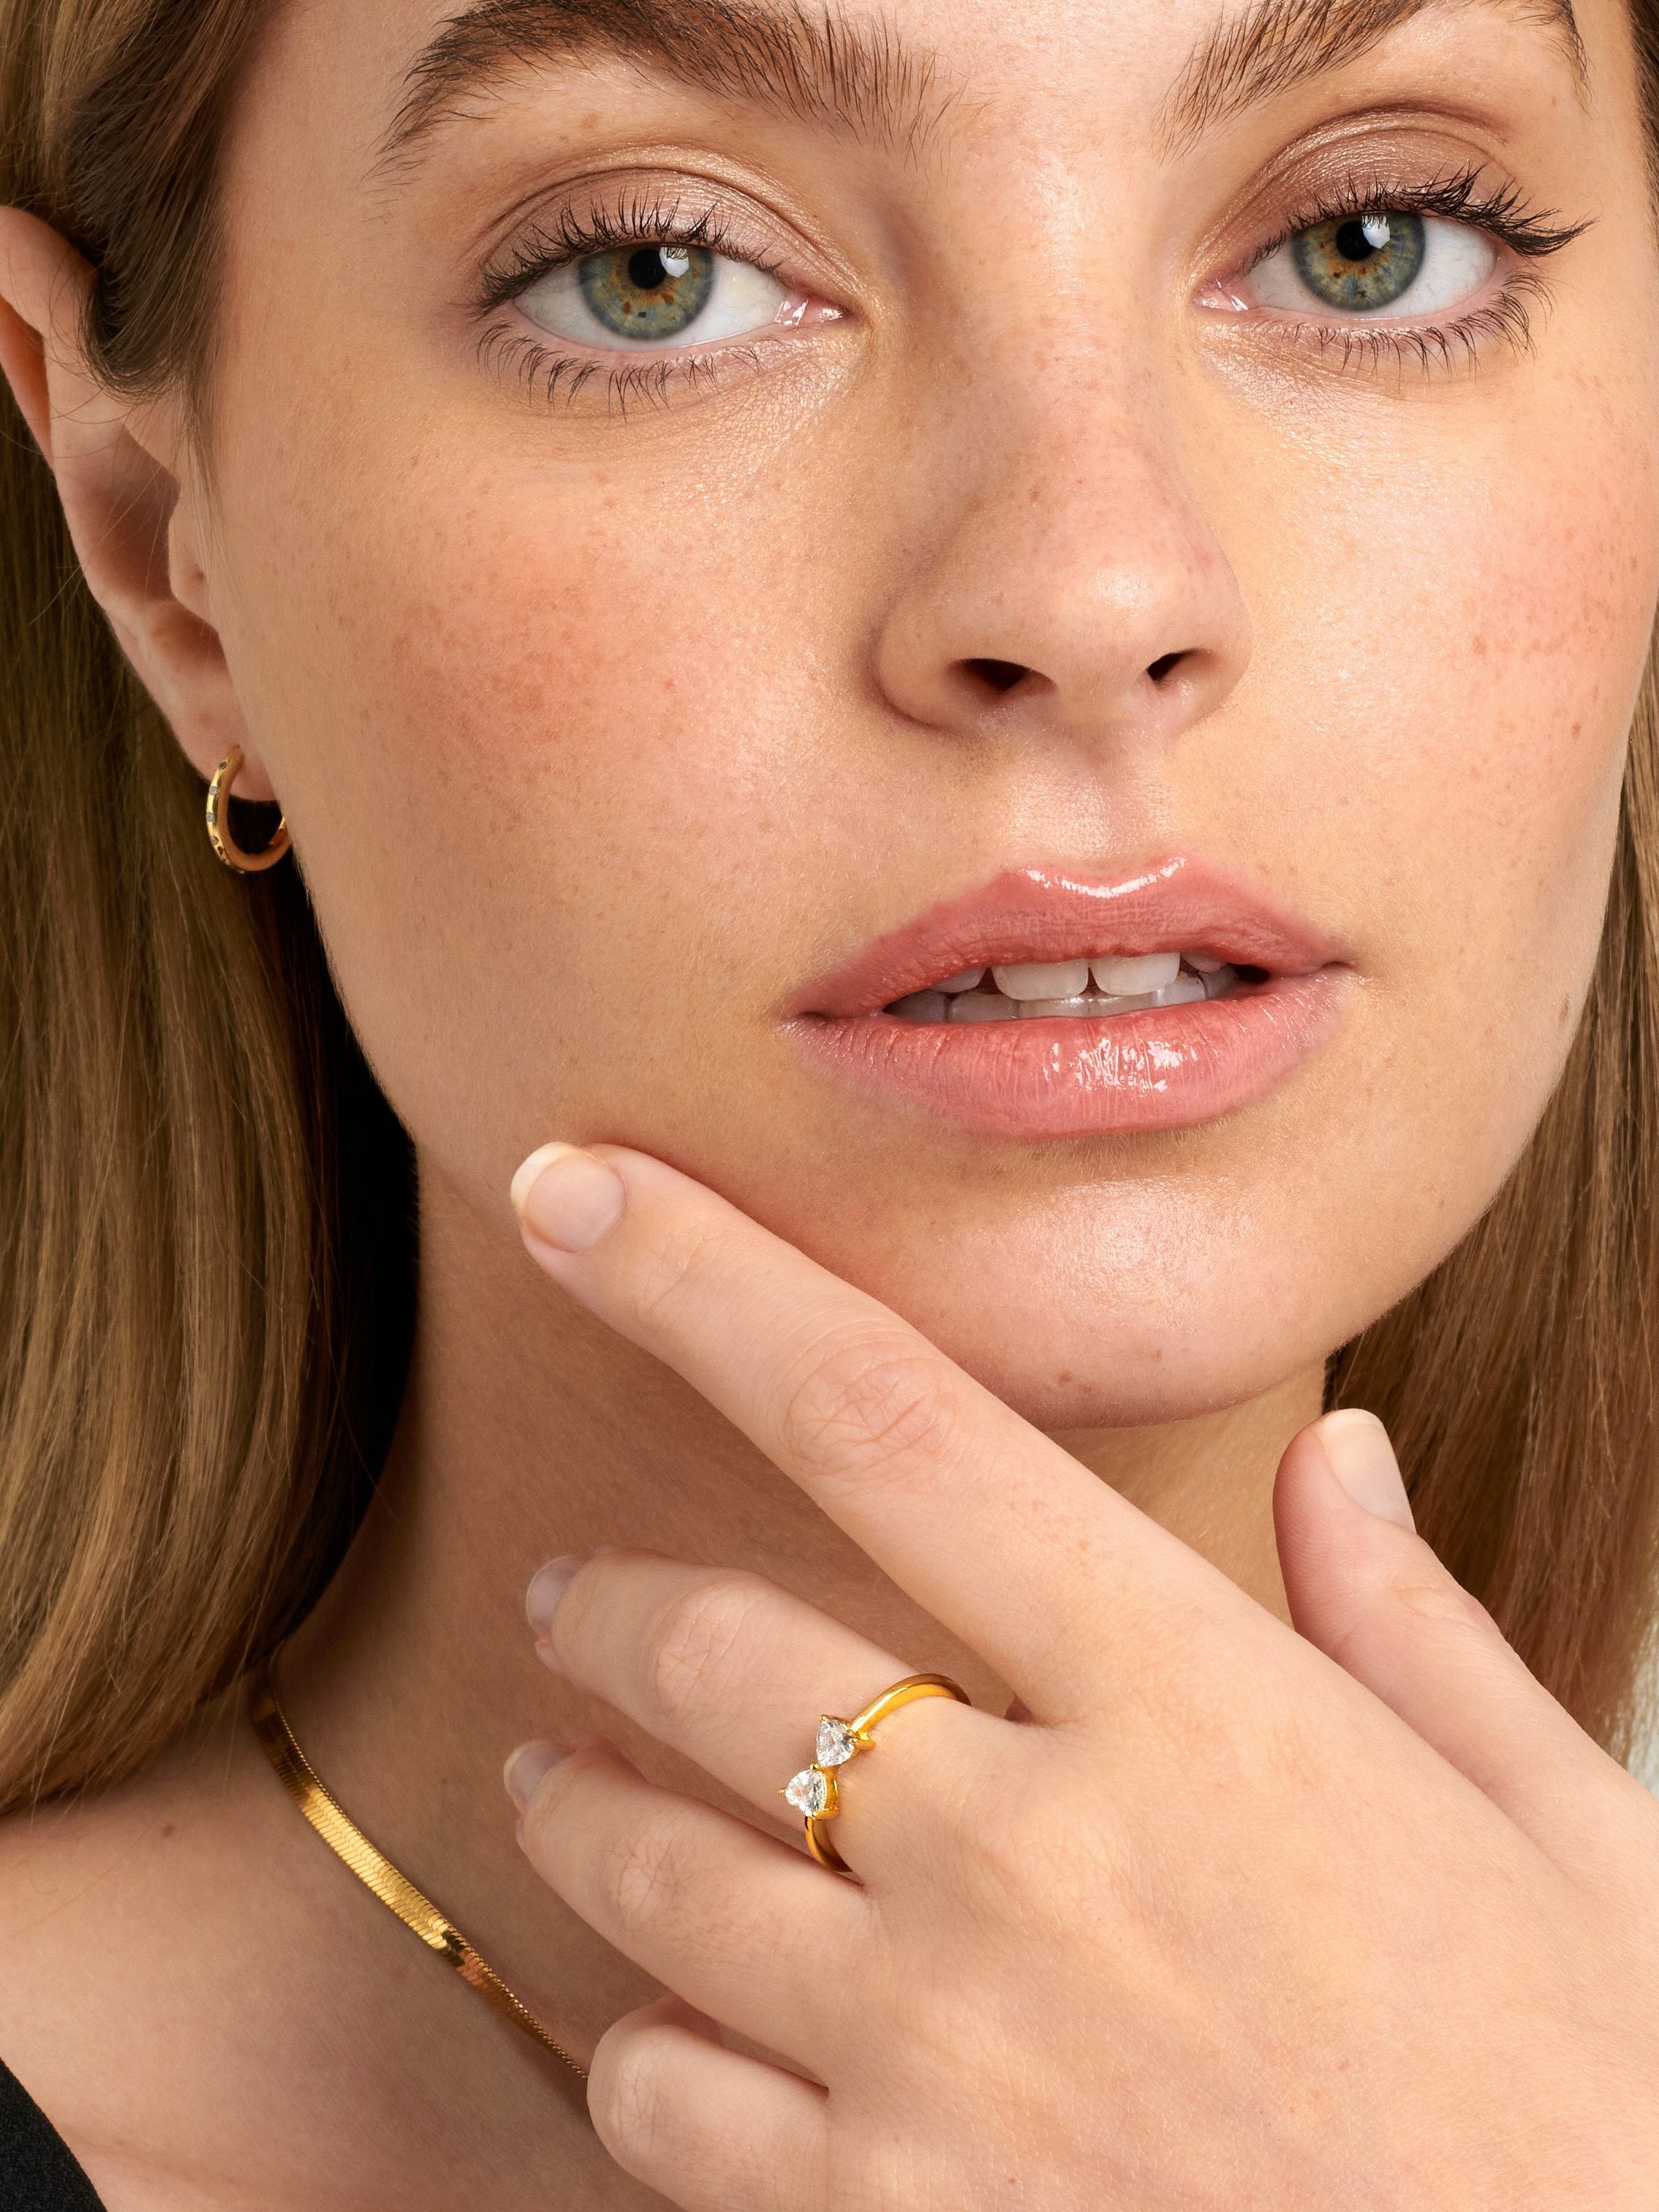 Teenage model wearing a gold heart ring.